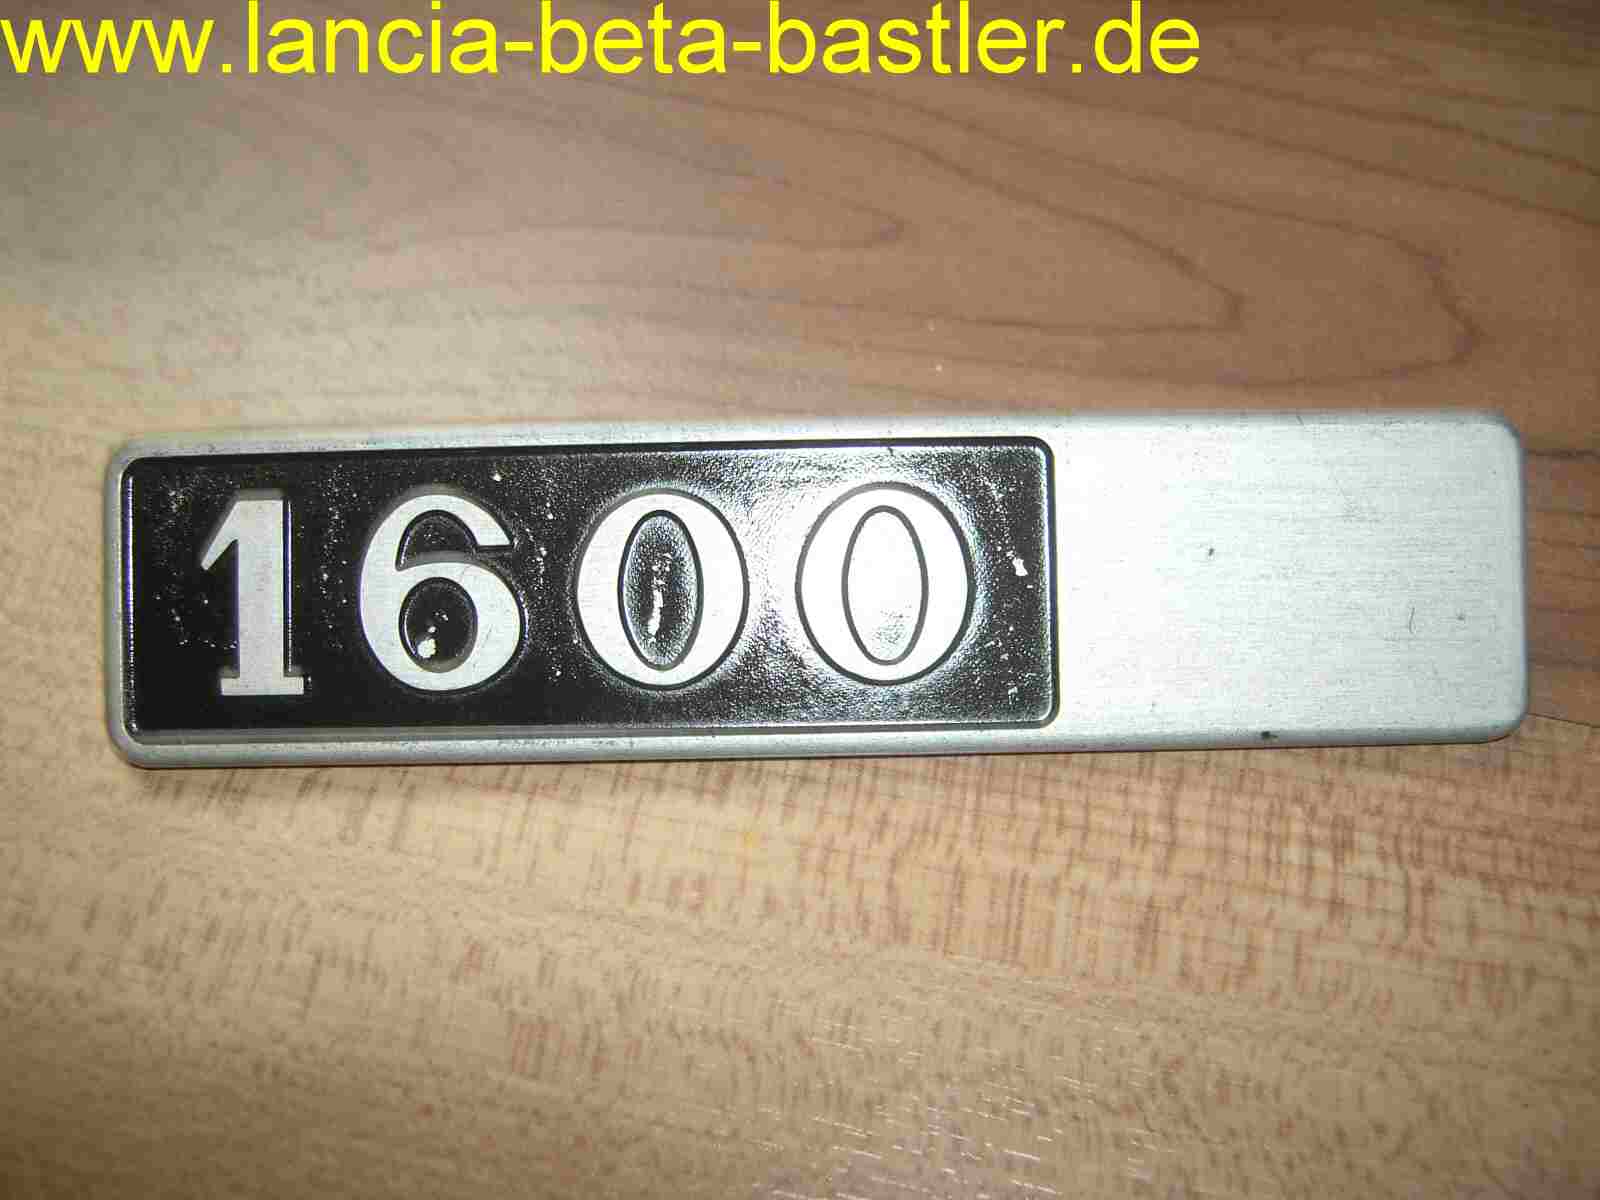 Lancia Beta 1600 Vorderseite 1